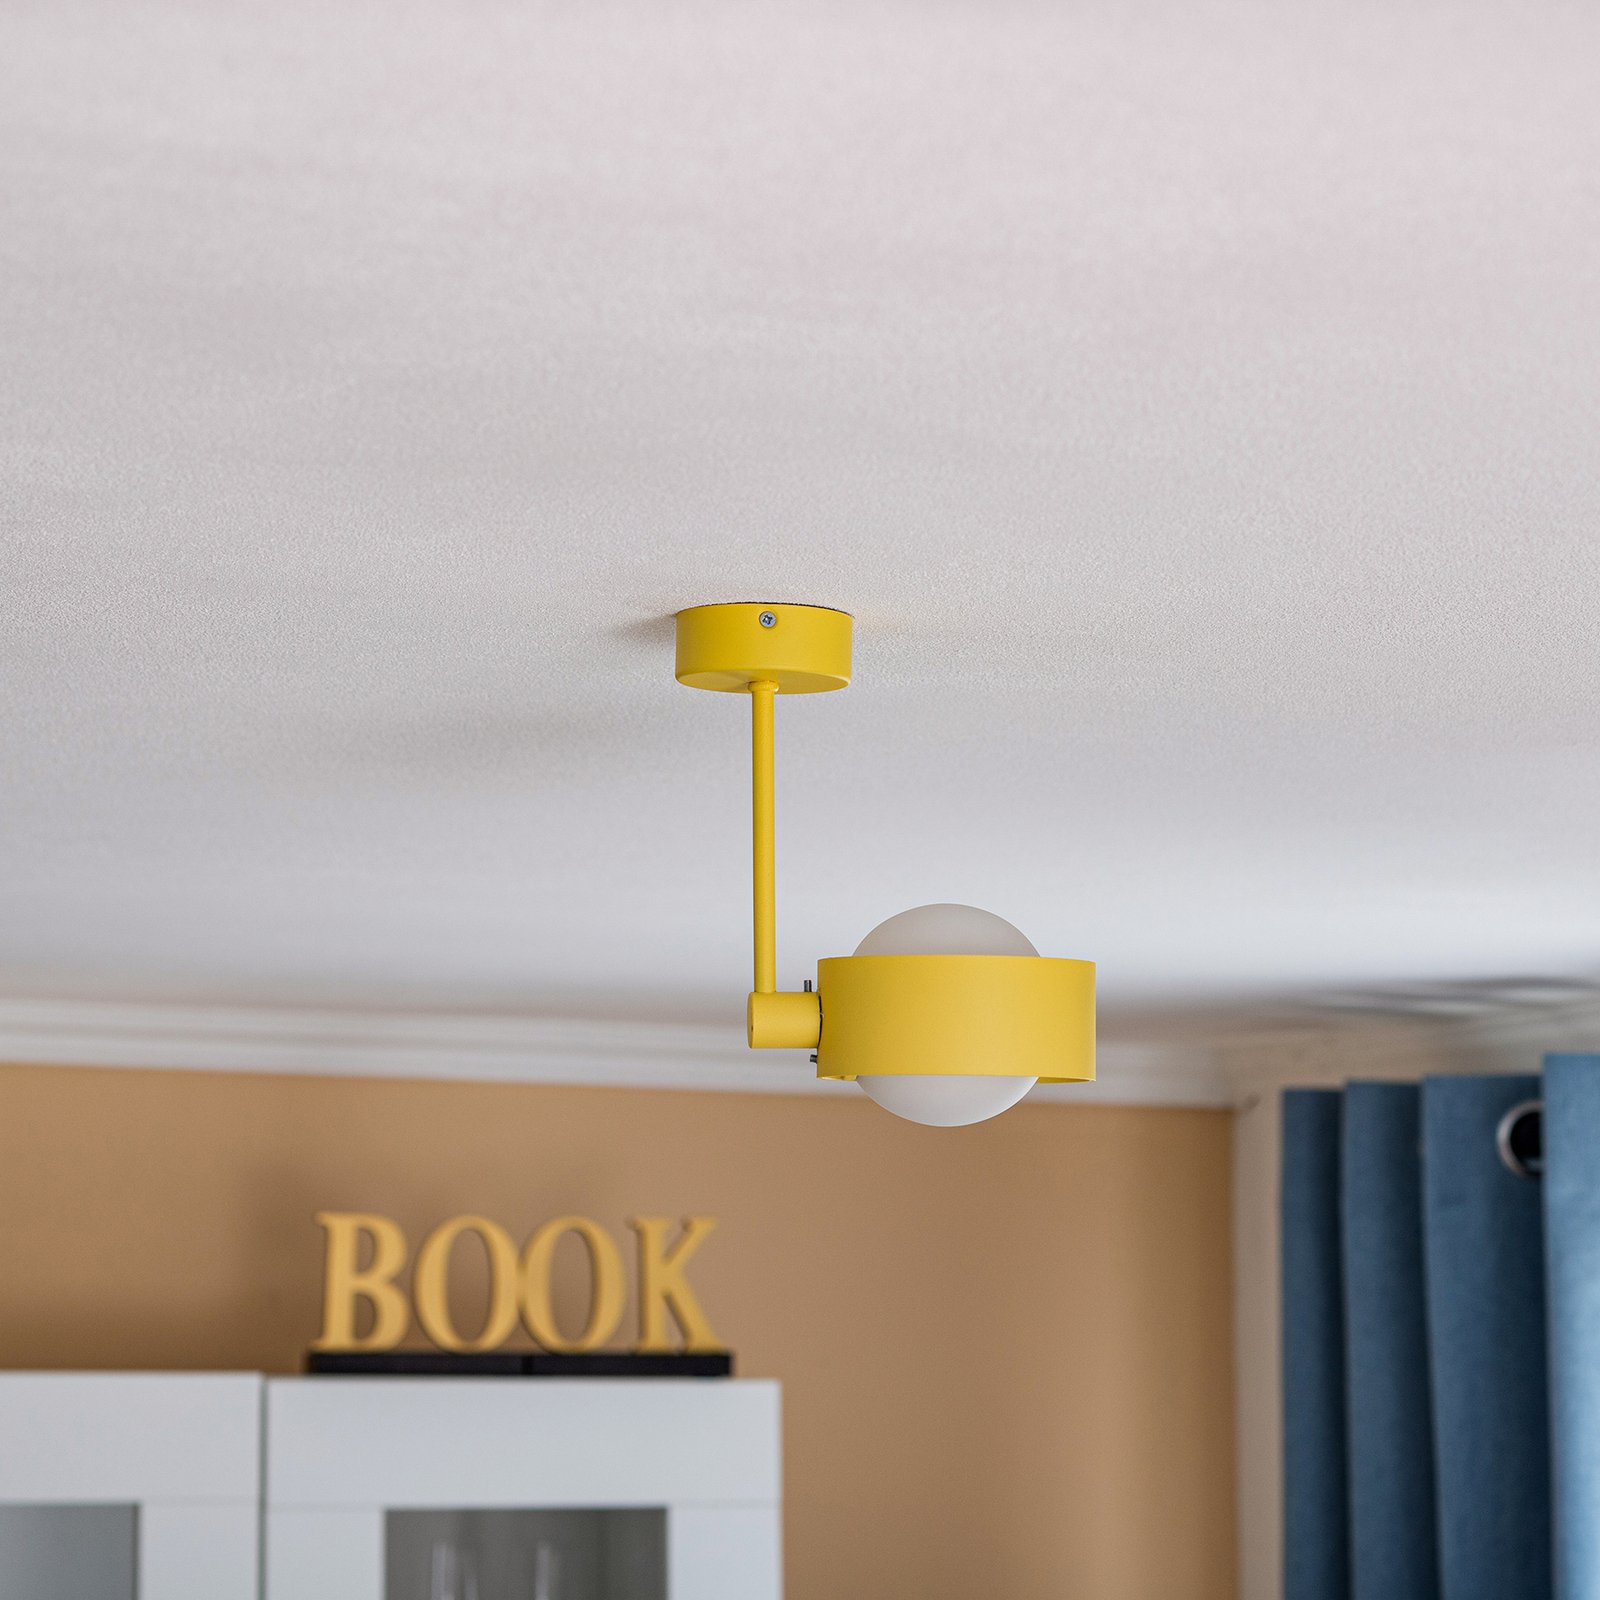 Mado ceiling light, steel, yellow, one-bulb